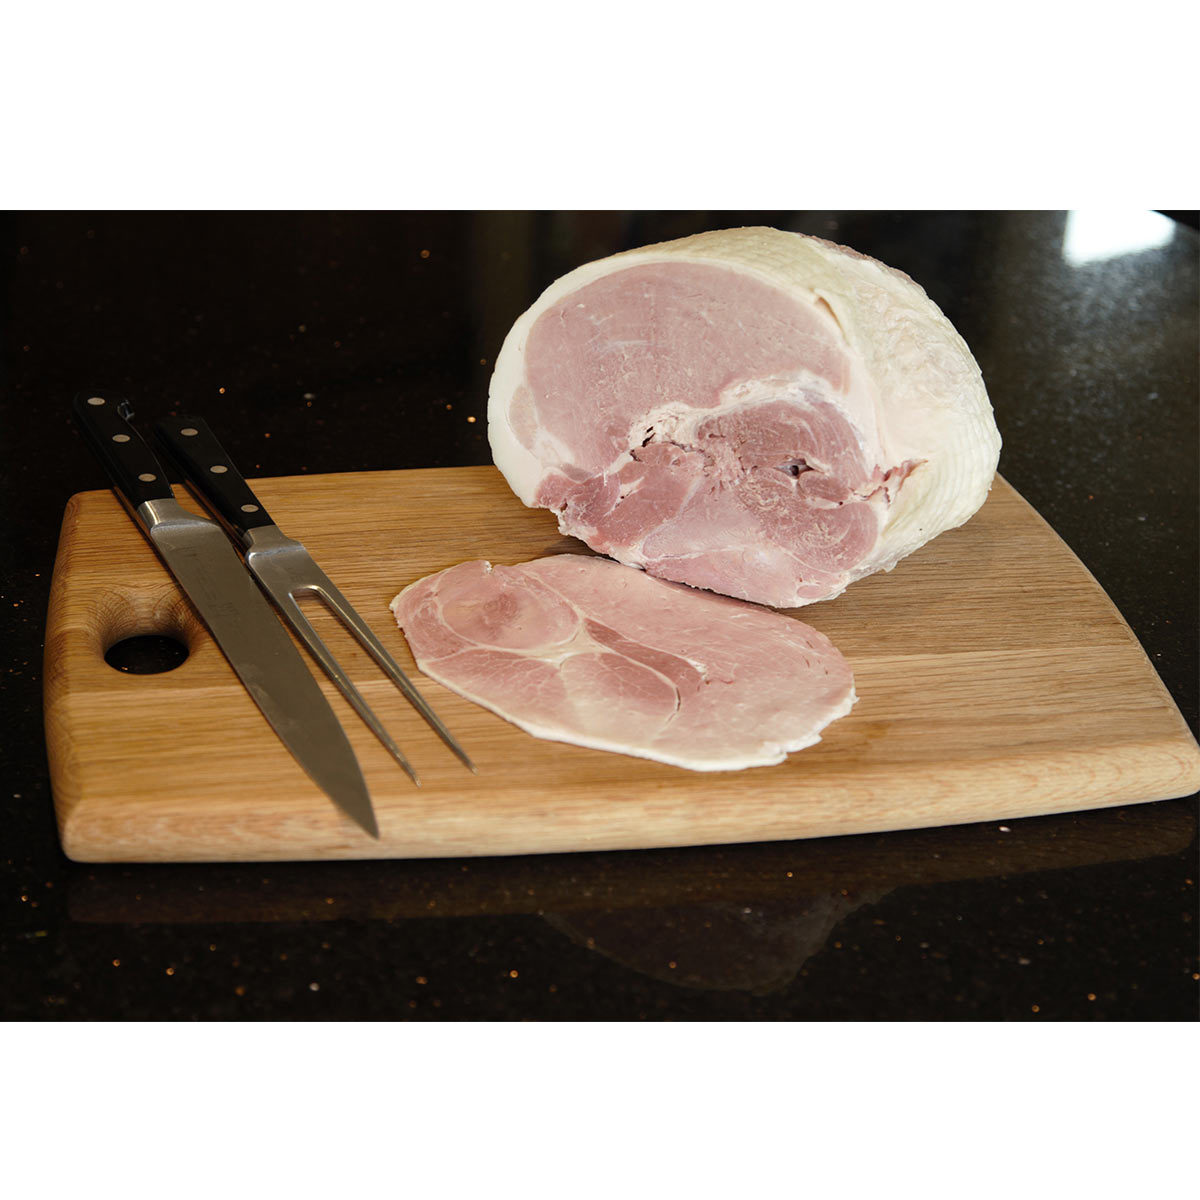 Lane Farm Suffolk Cooked Ham, 2kg (Serves 20-25 people)